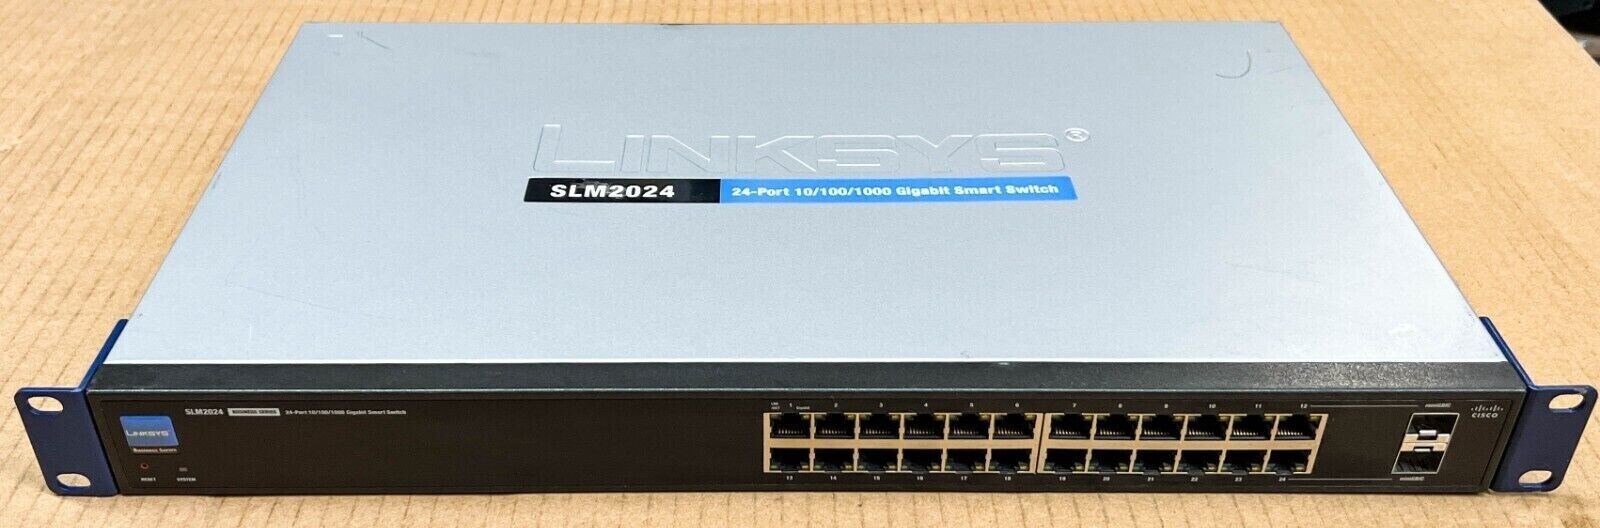 Cisco Linksys SLM2024 Gigabit Smart Switch 24-Port